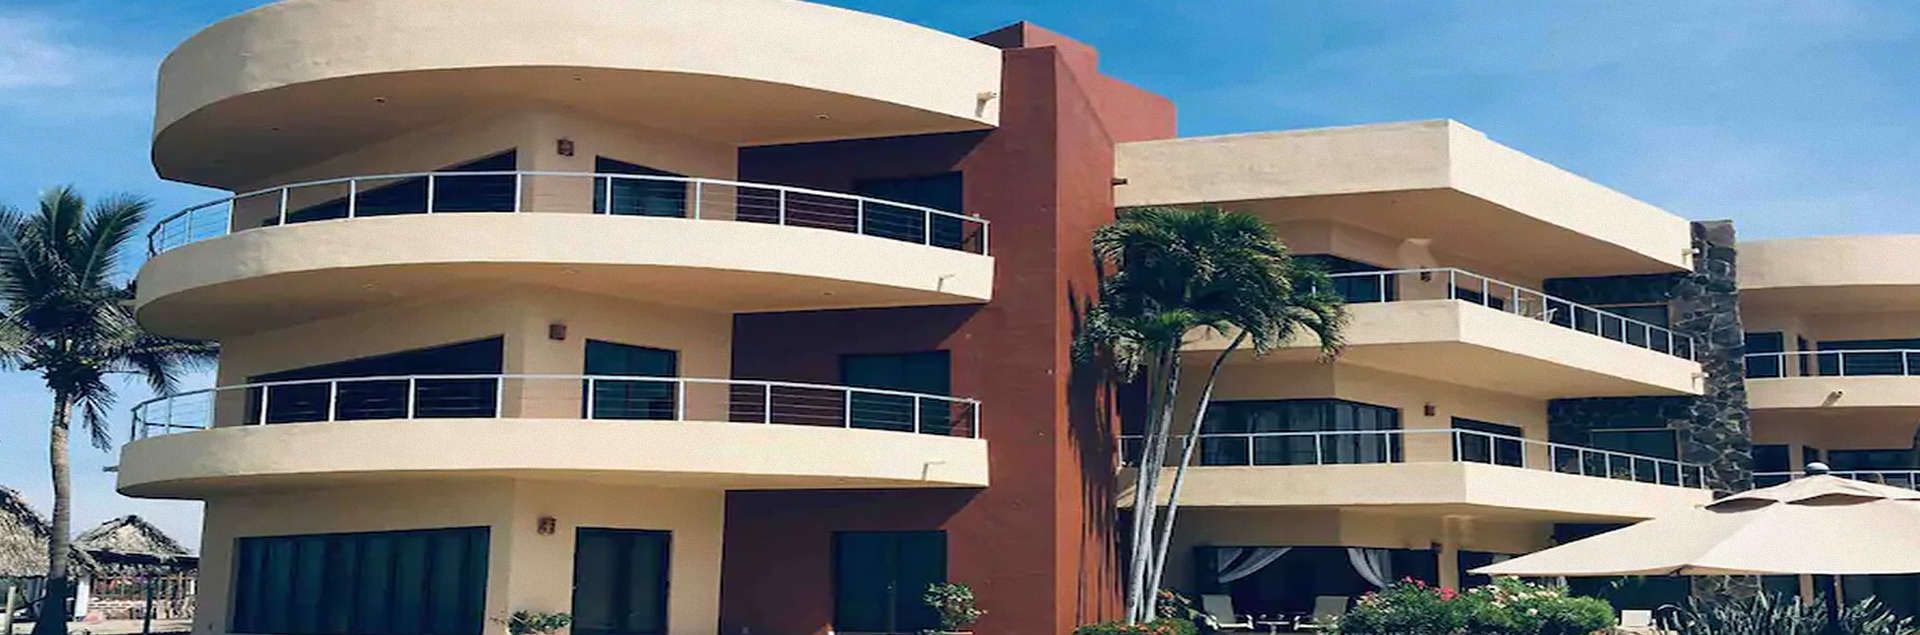 Luxury Apartment For Rent Playa Grande